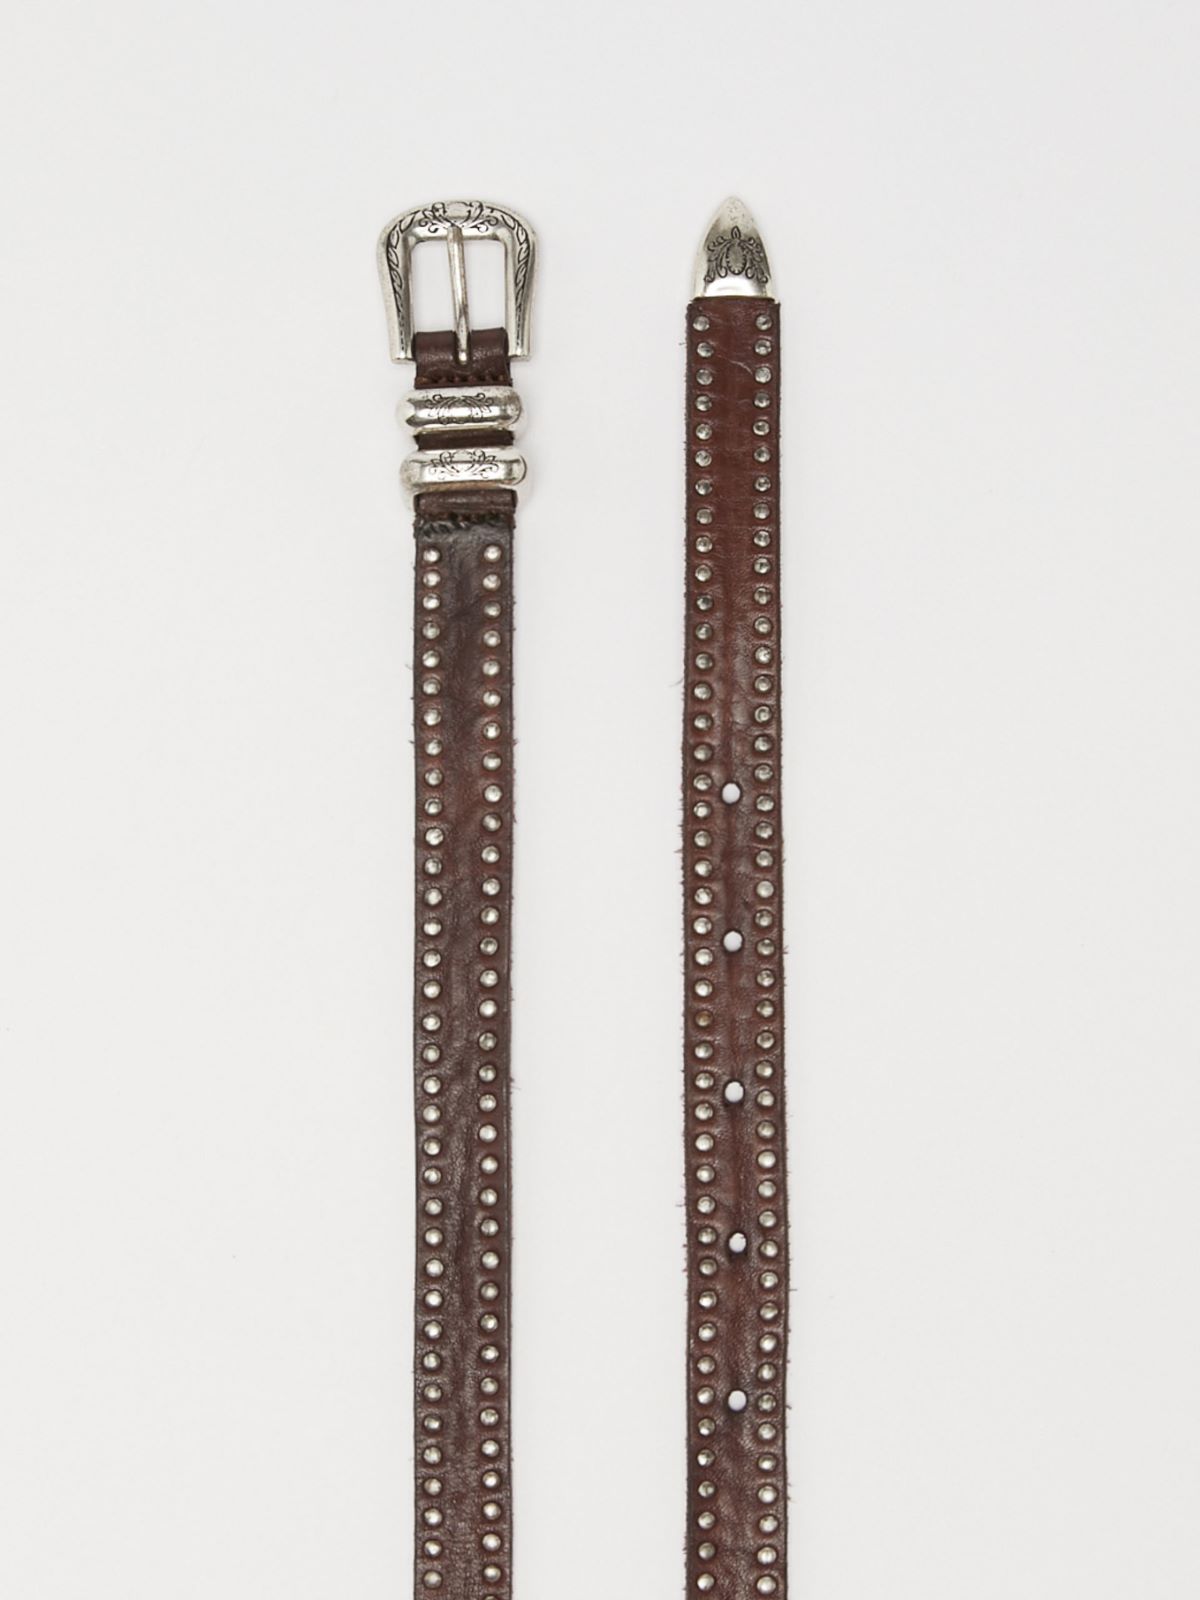 Buckle and tip-adorned belt - DARK BOWN - Weekend Max Mara - 2